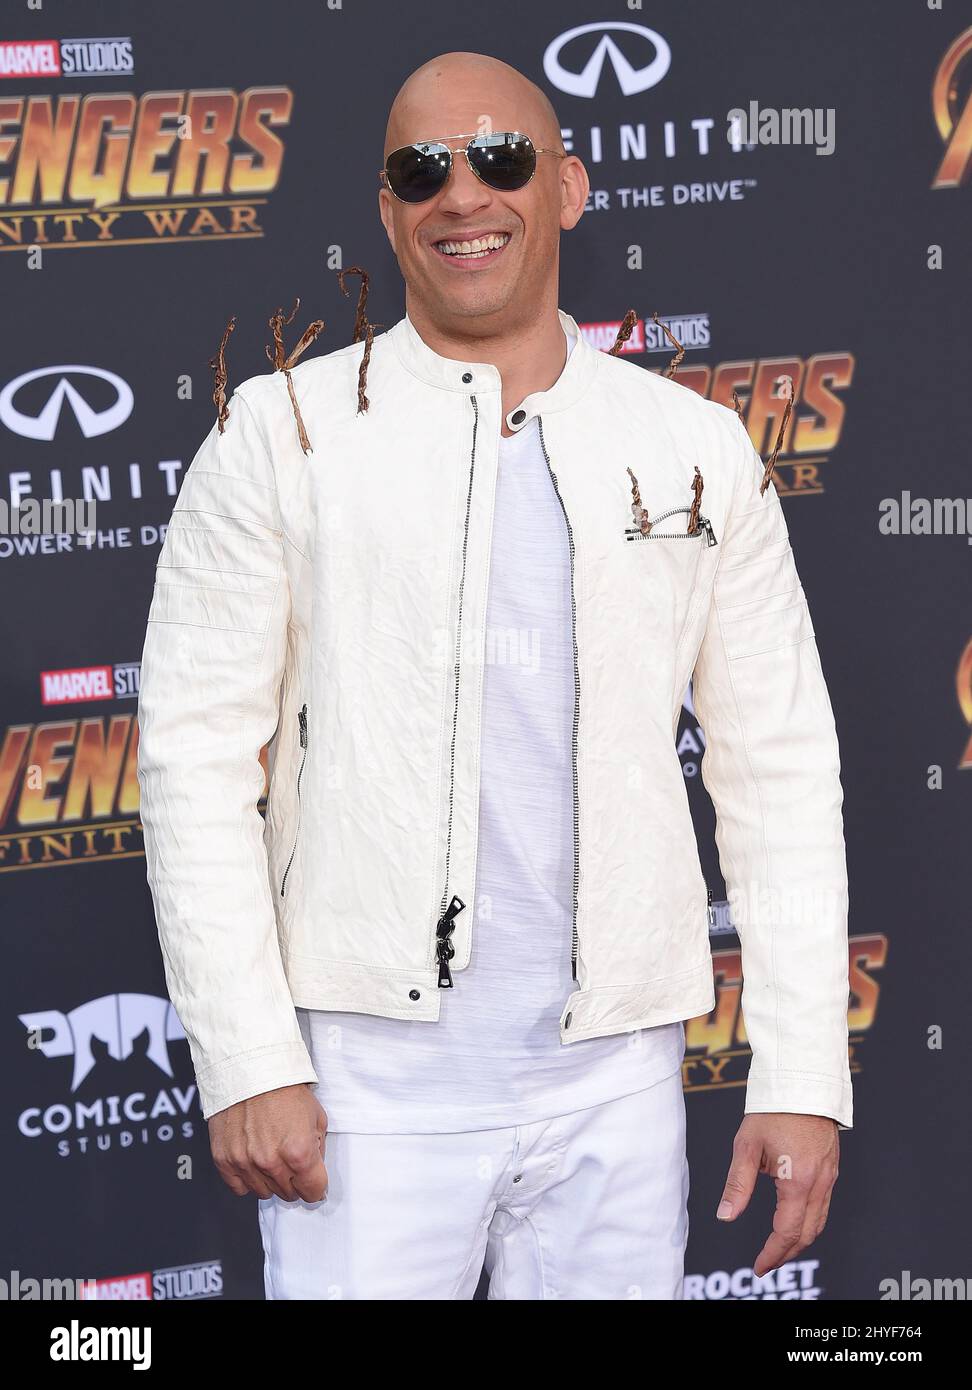 Vin Diesel attending the world premiere of Avengers: Infinity War, held ...